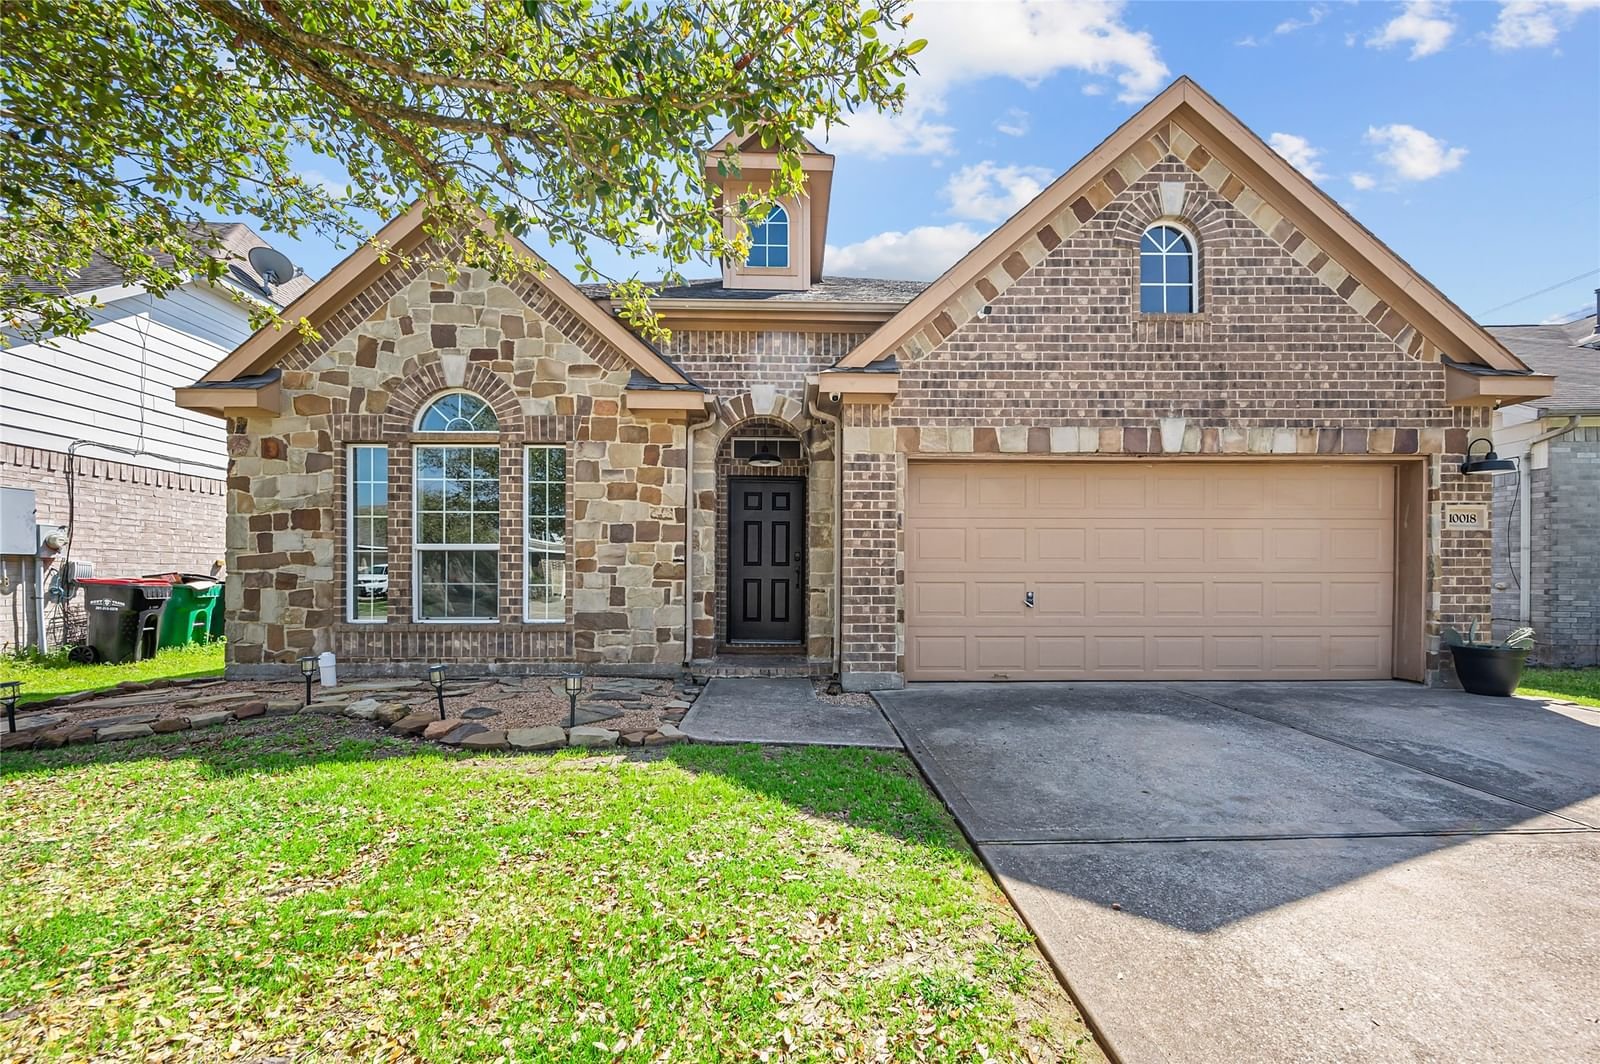 Real estate property located at 10018 Lynnwood, Chambers, Lynnwood, Baytown, TX, US